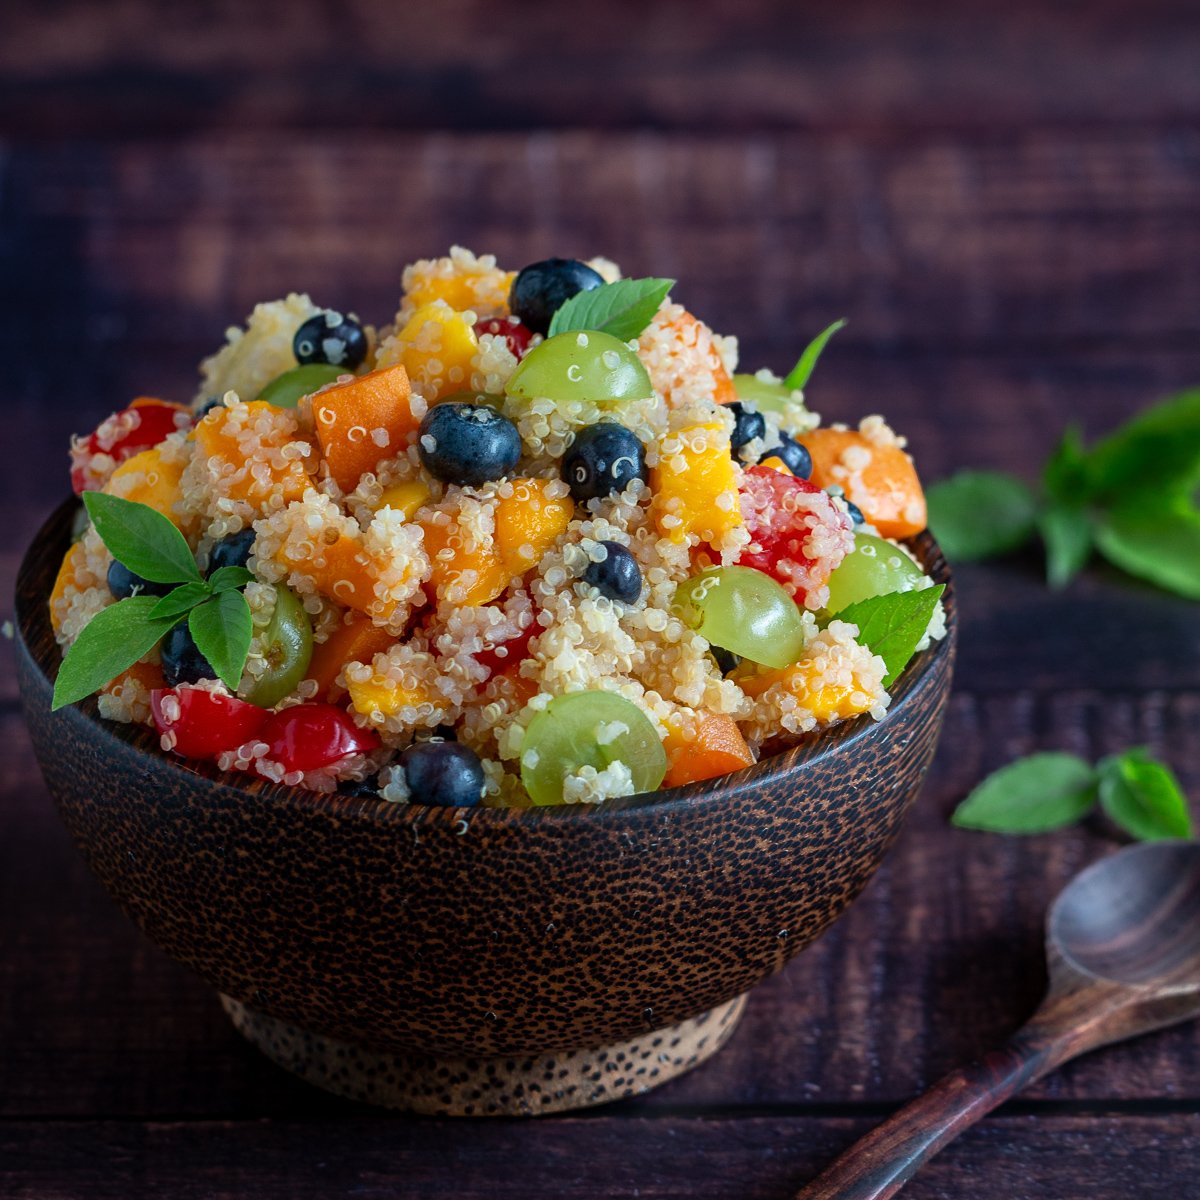 https://www.hwcmagazine.com/wp-content/uploads/2015/04/quinoa-fruit-salad-1200-x-1200-9815.jpg